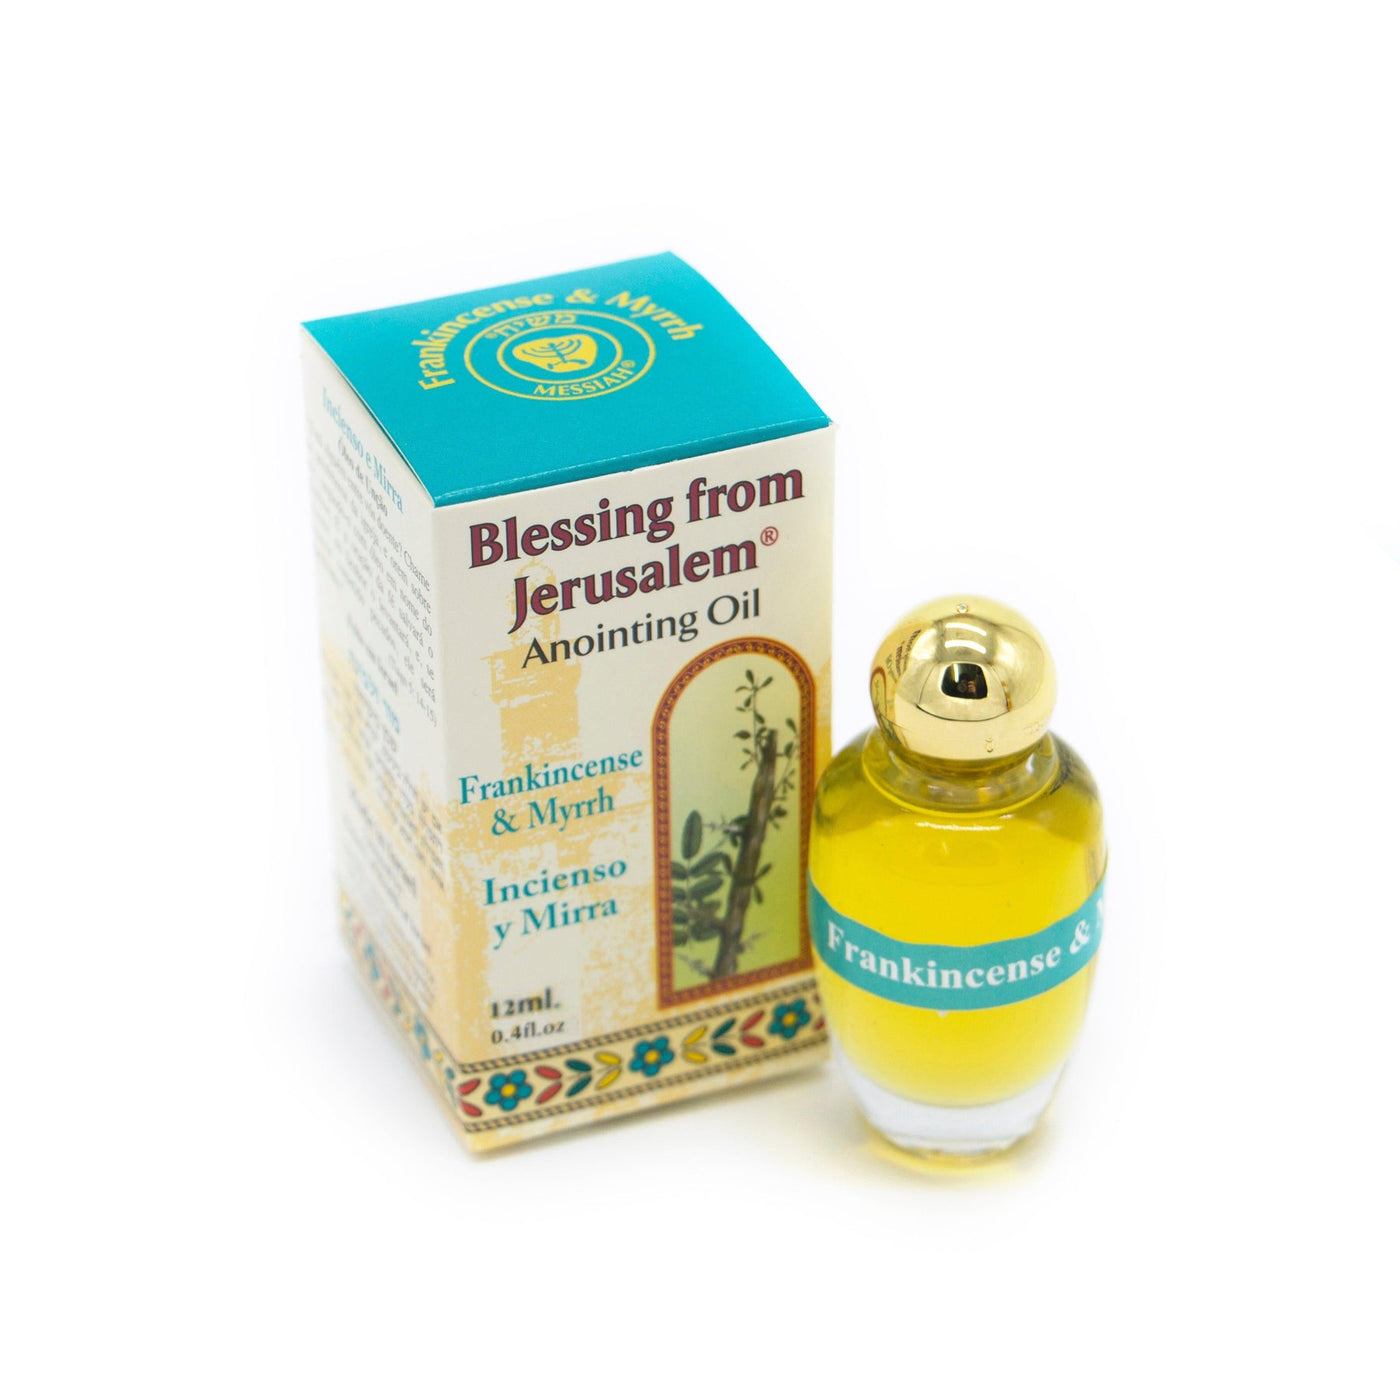 Anointing Oil Frankincense and Myrrh 12 ml - 0.4 oz From Holyland Jerusalem